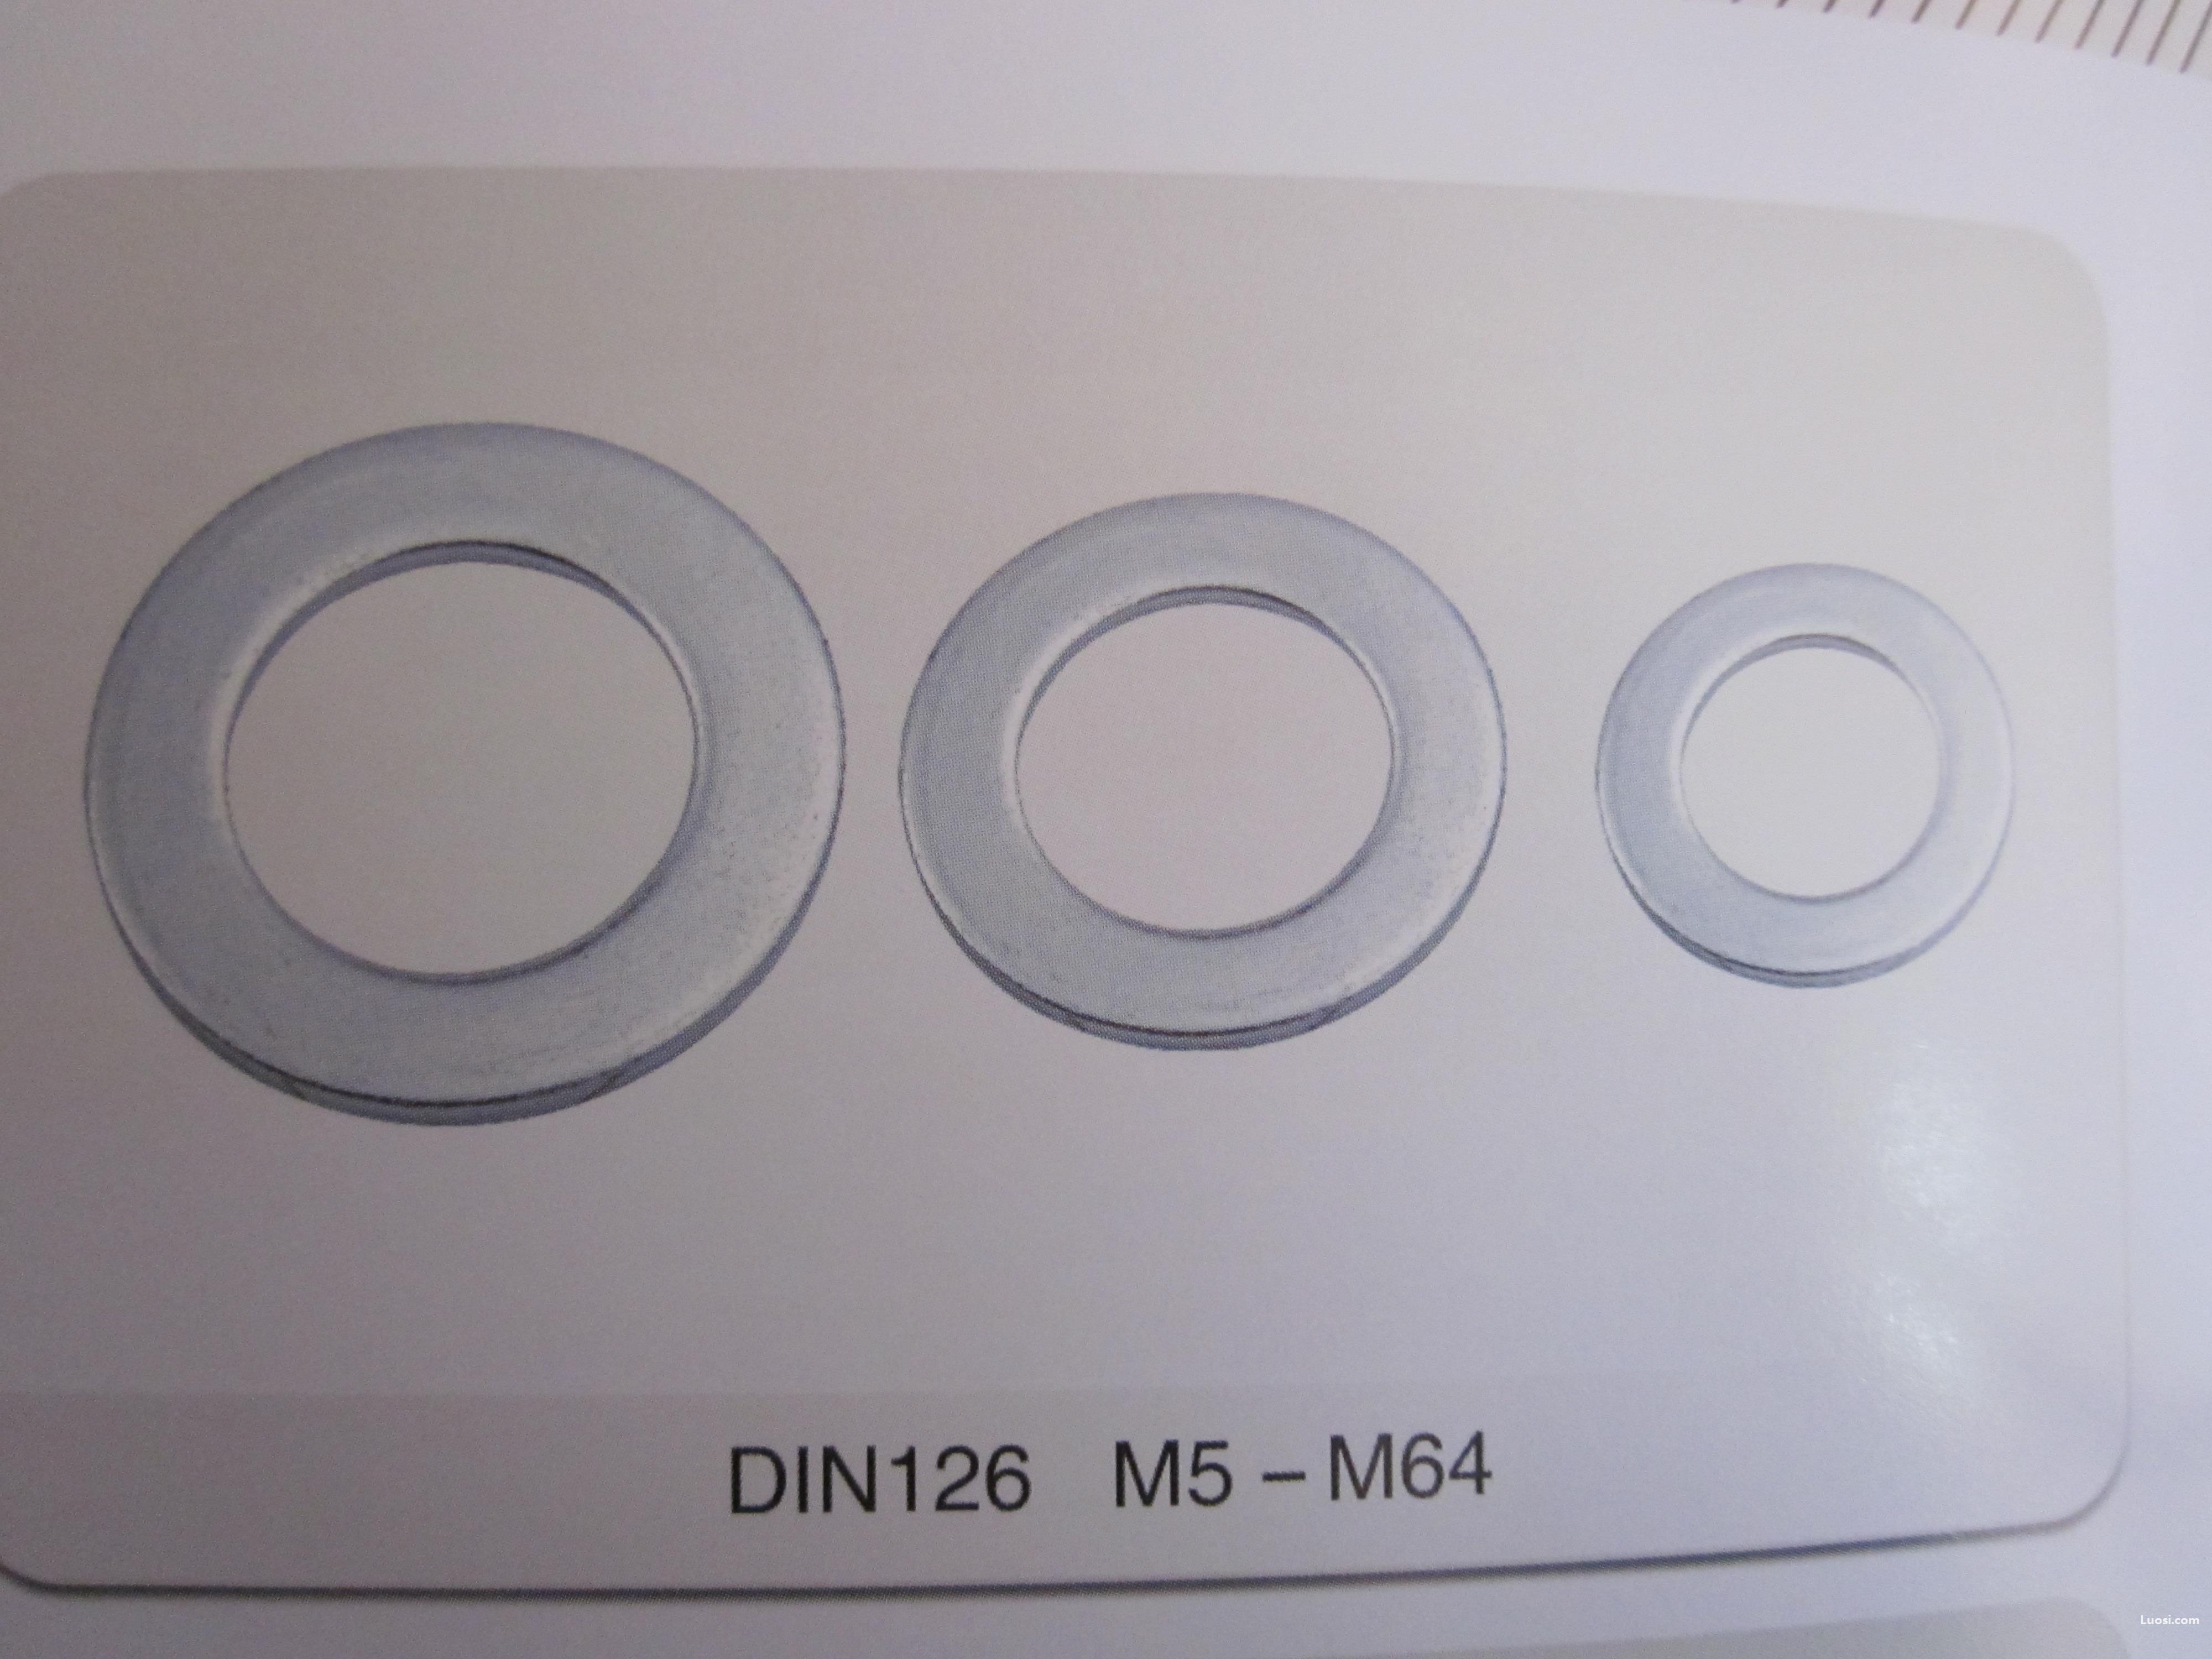 DIN 125-1A 平垫圈—硬度250HV以下，六角螺栓与螺母组合用(A型)